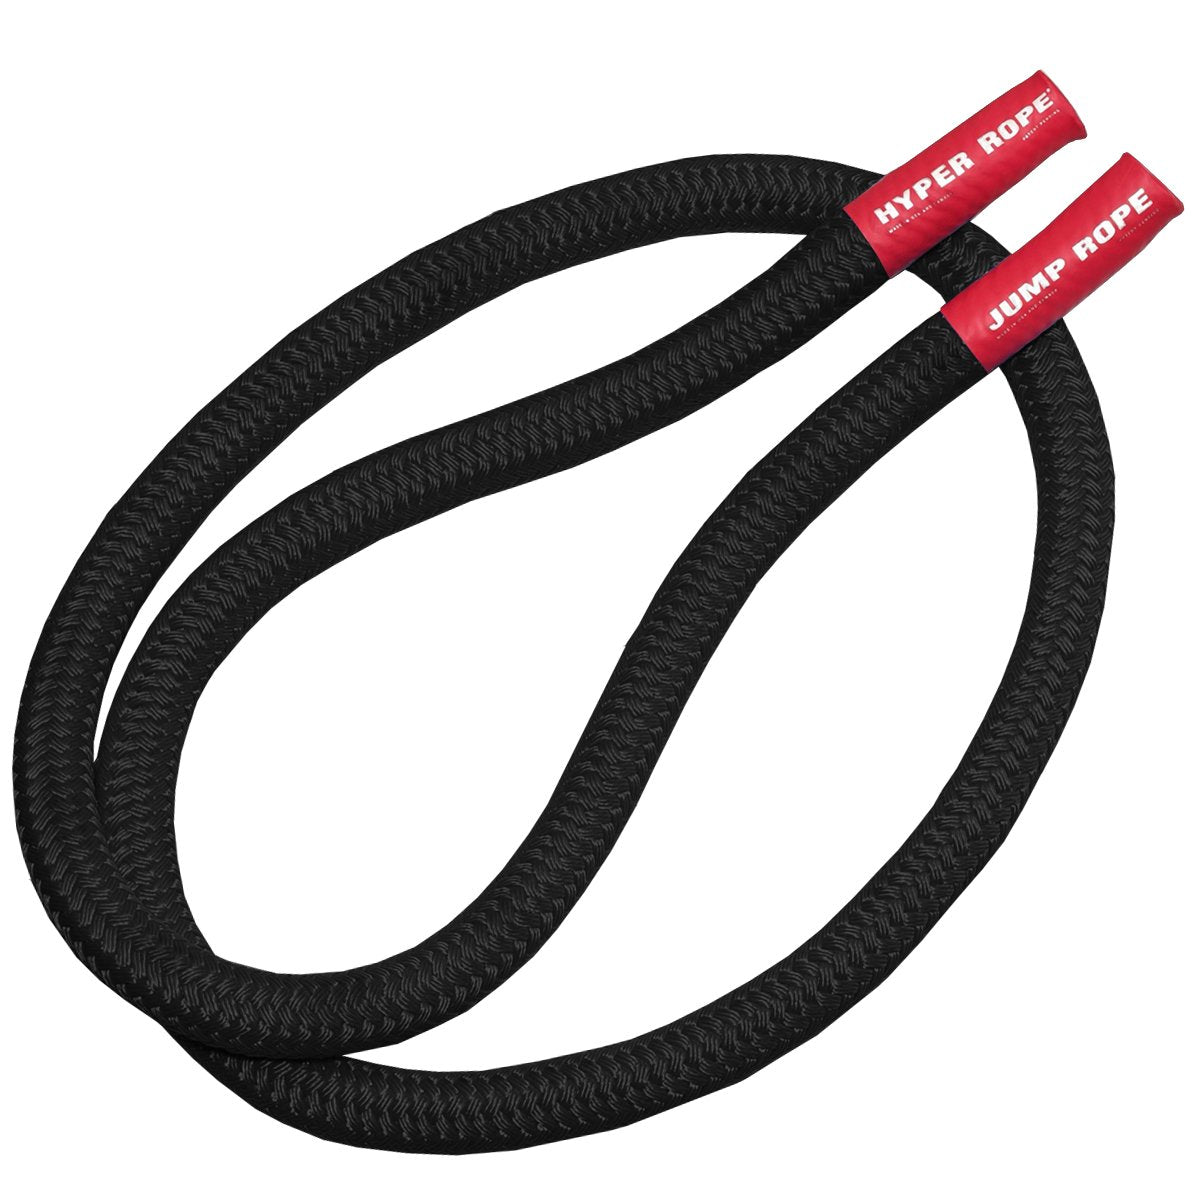 Flexible Cable Organizer Tube - 5 ft x 1 x 1 - Black